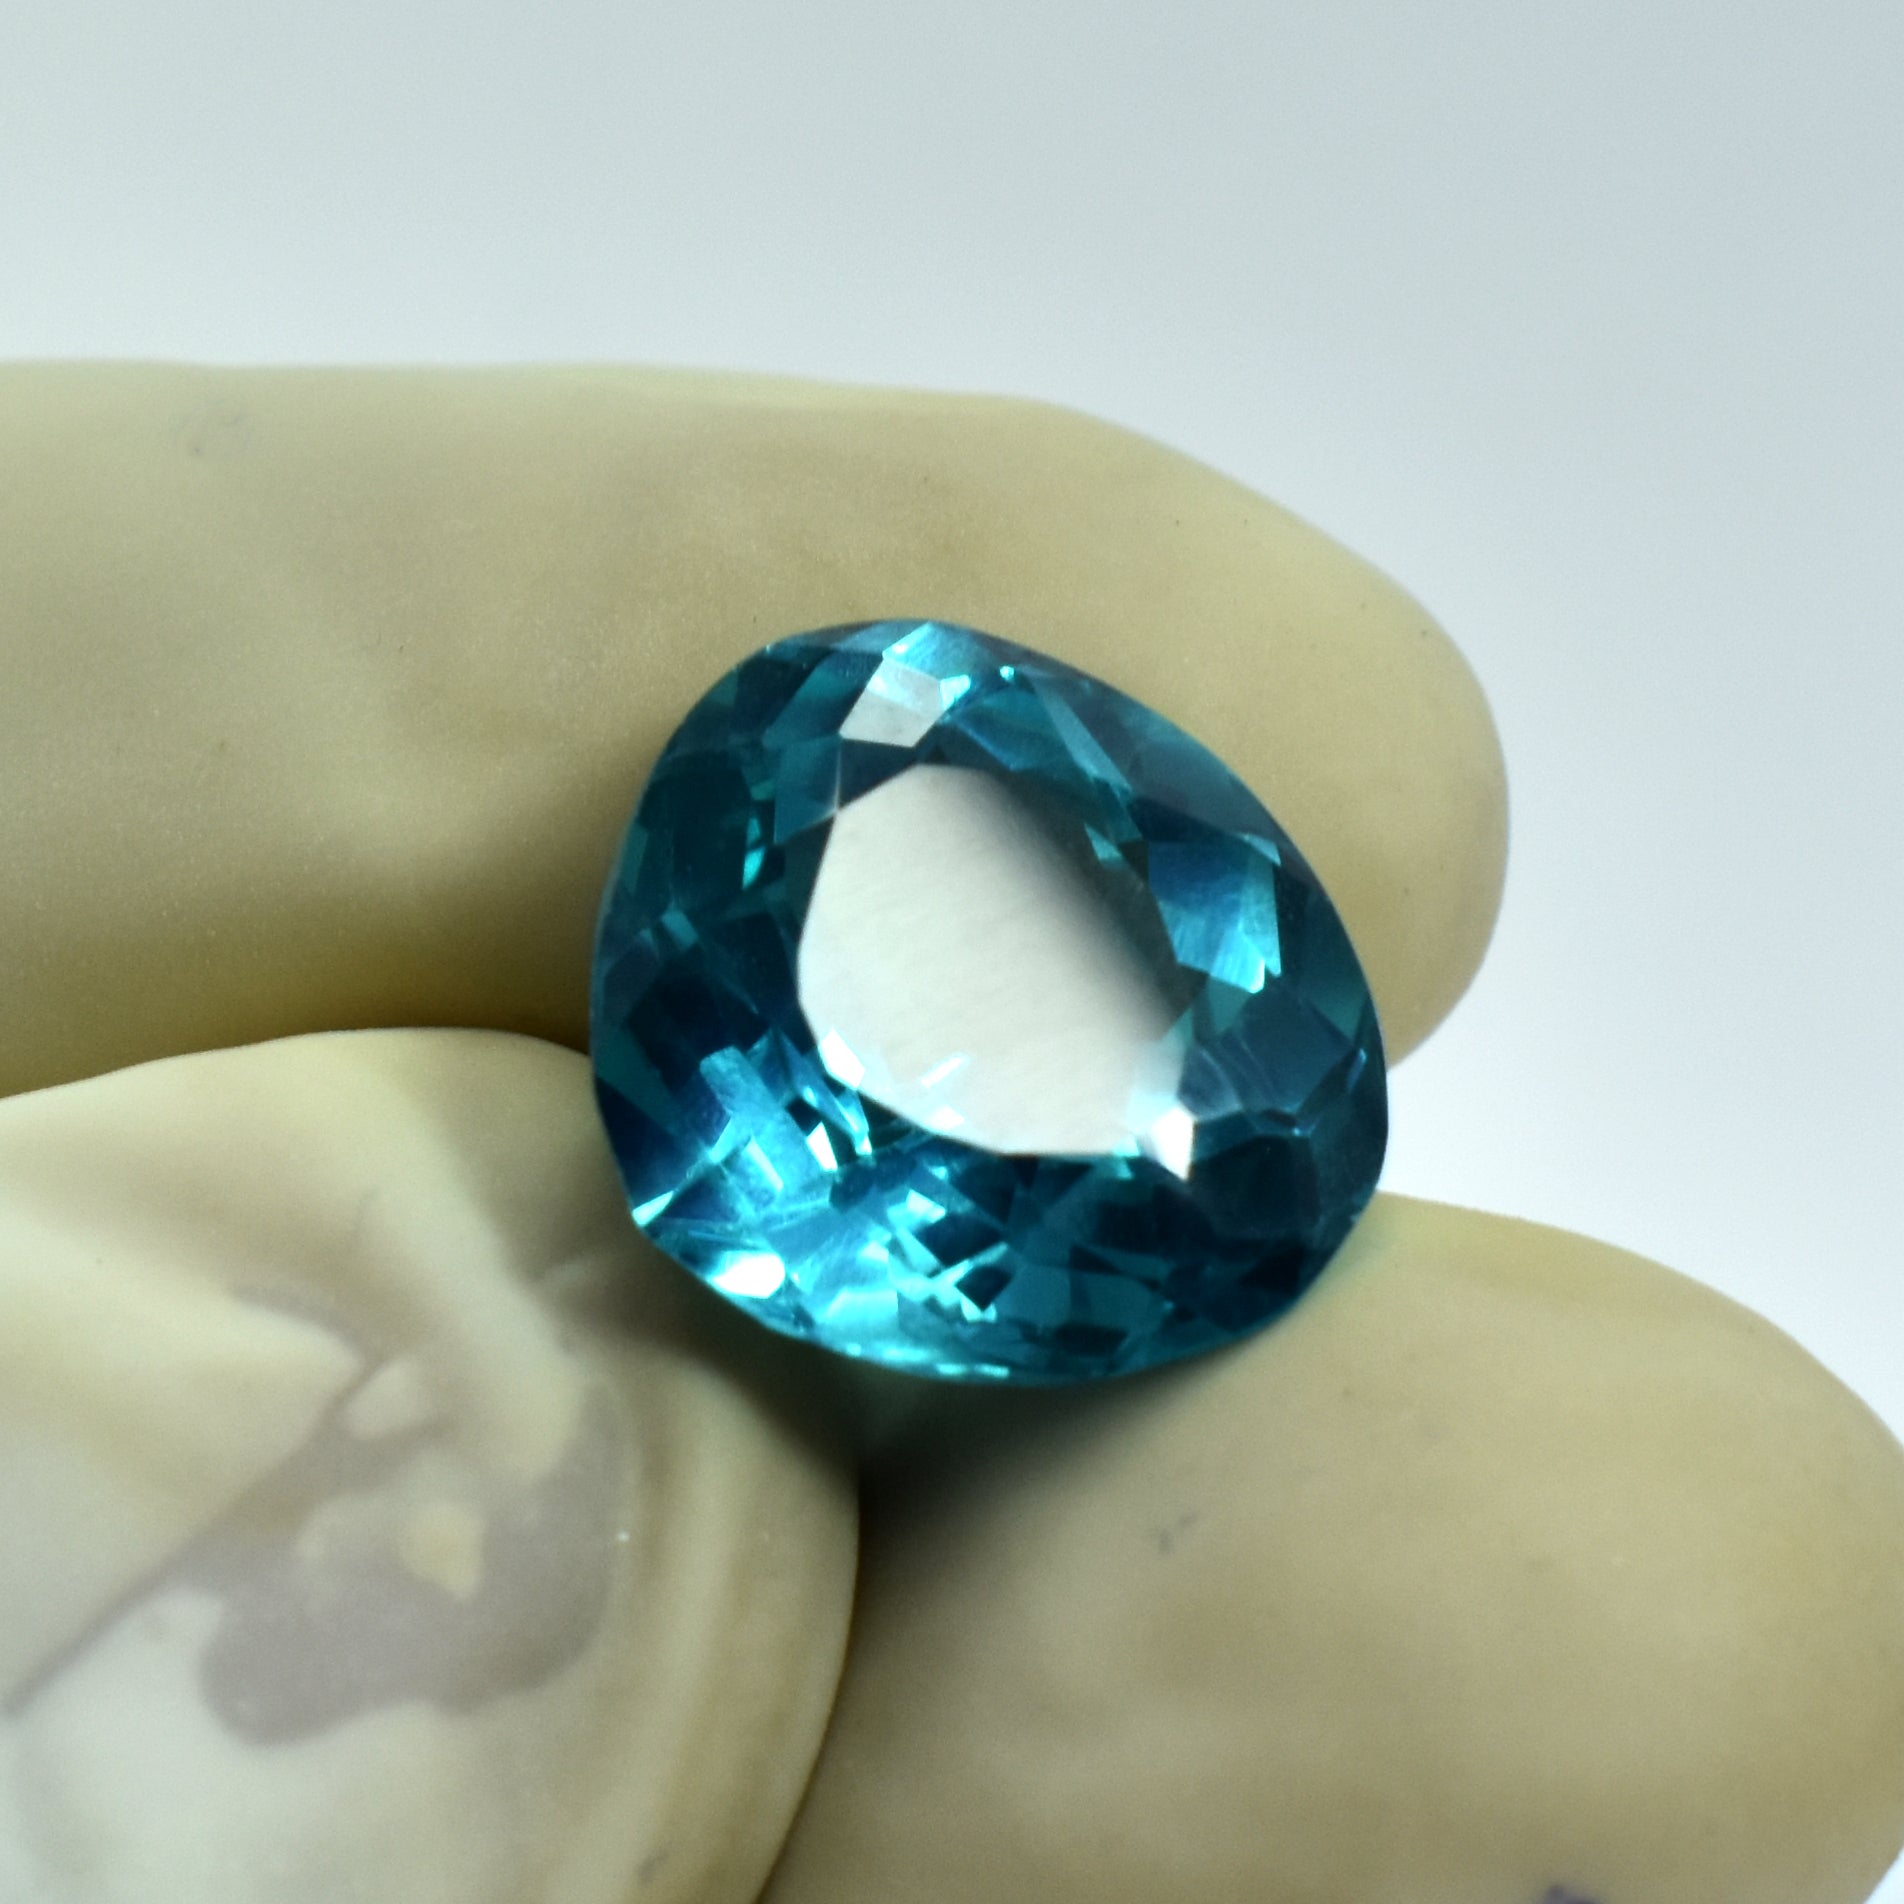 Sri Lanka Sapphire Natural 6.05 Carat Pear Shape Bluish Green Montana Sapphire Natural Certified Gemstone